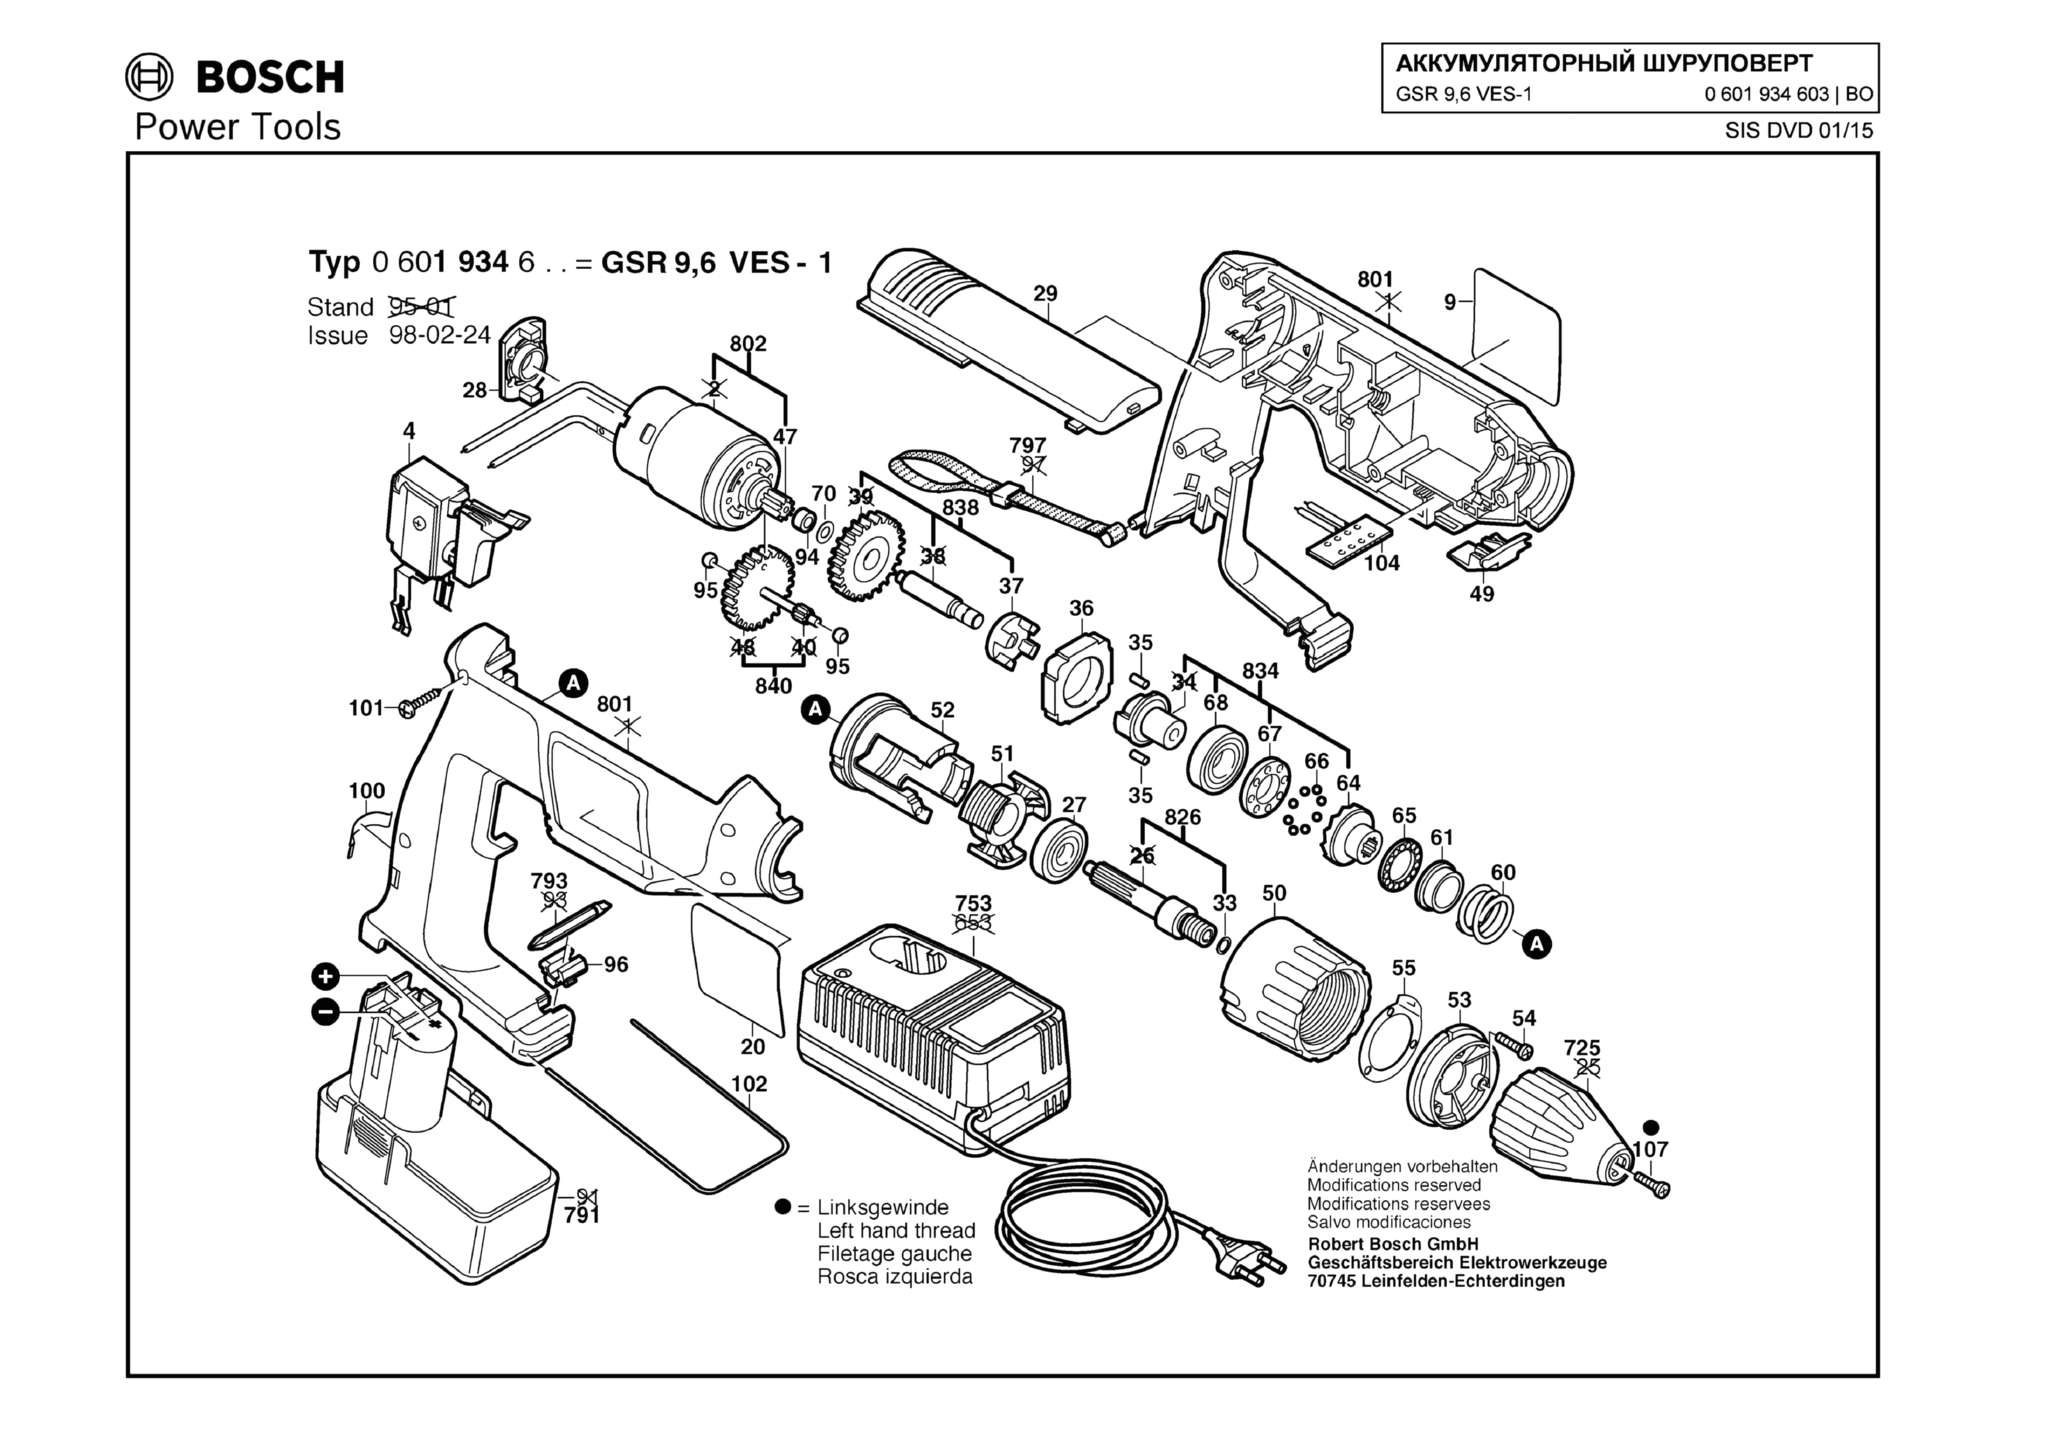 Запчасти, схема и деталировка Bosch GSR 9,6 VES-1 (ТИП 0601934603)